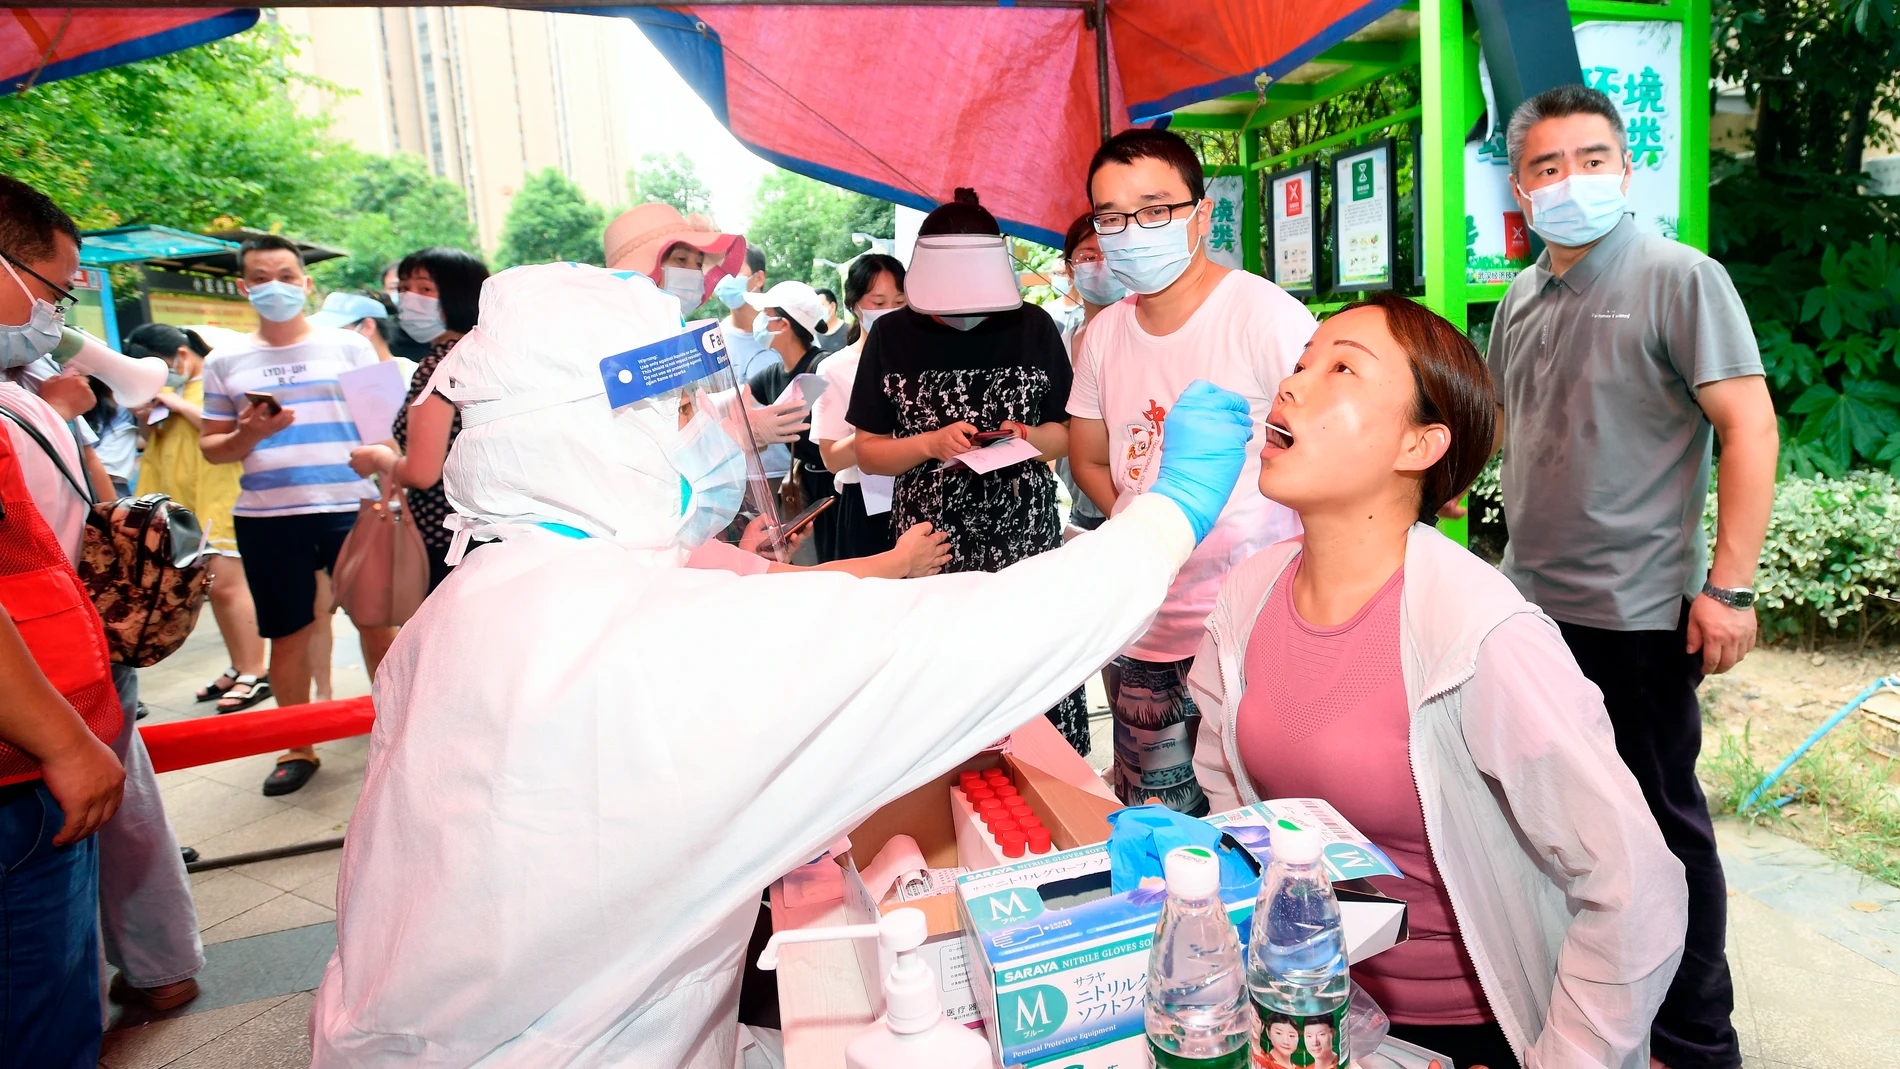 Test contra el virus en Wuhan ayer